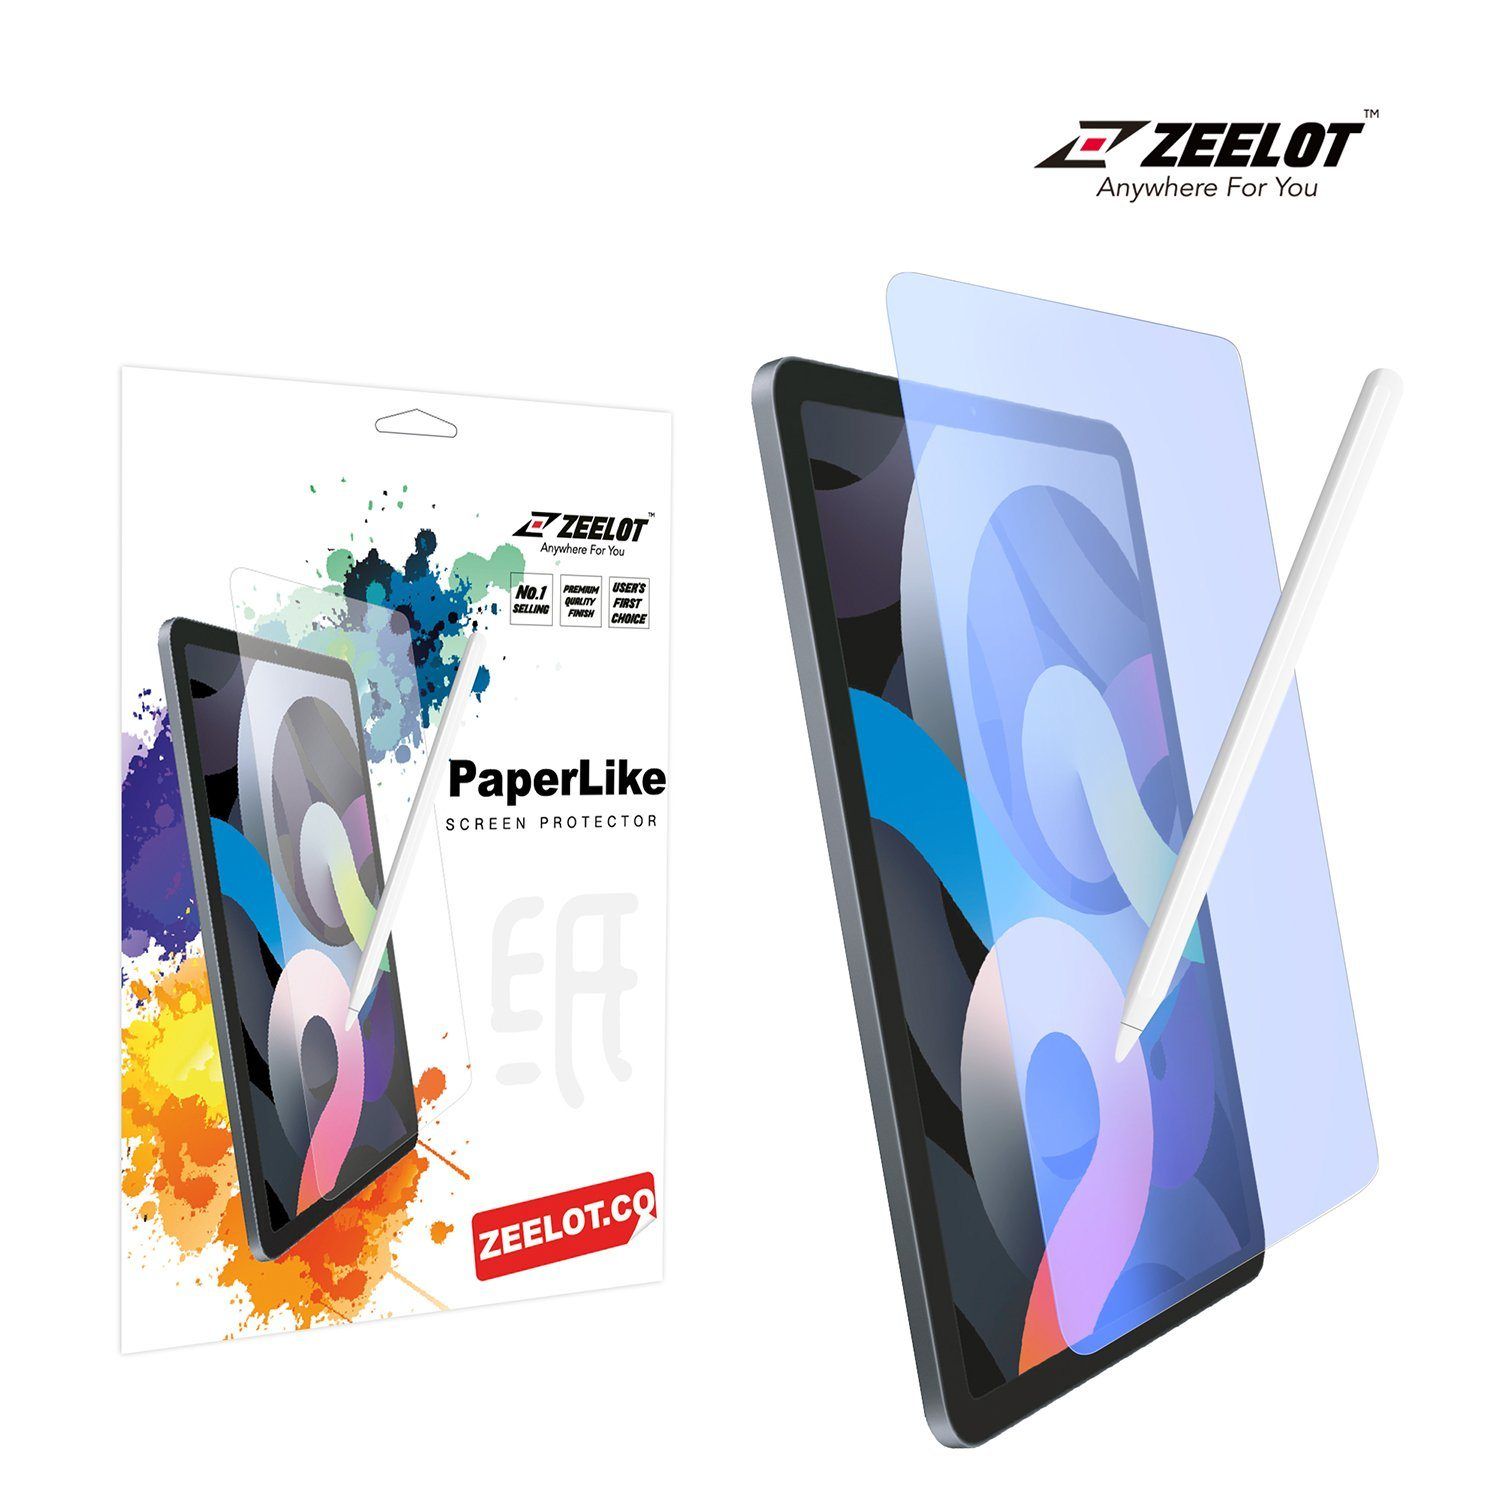 ZEELOT Paper Like Screen Protector for iPad 10.2" (2020/2019), Anti Blue Ray Default ZEELOT 